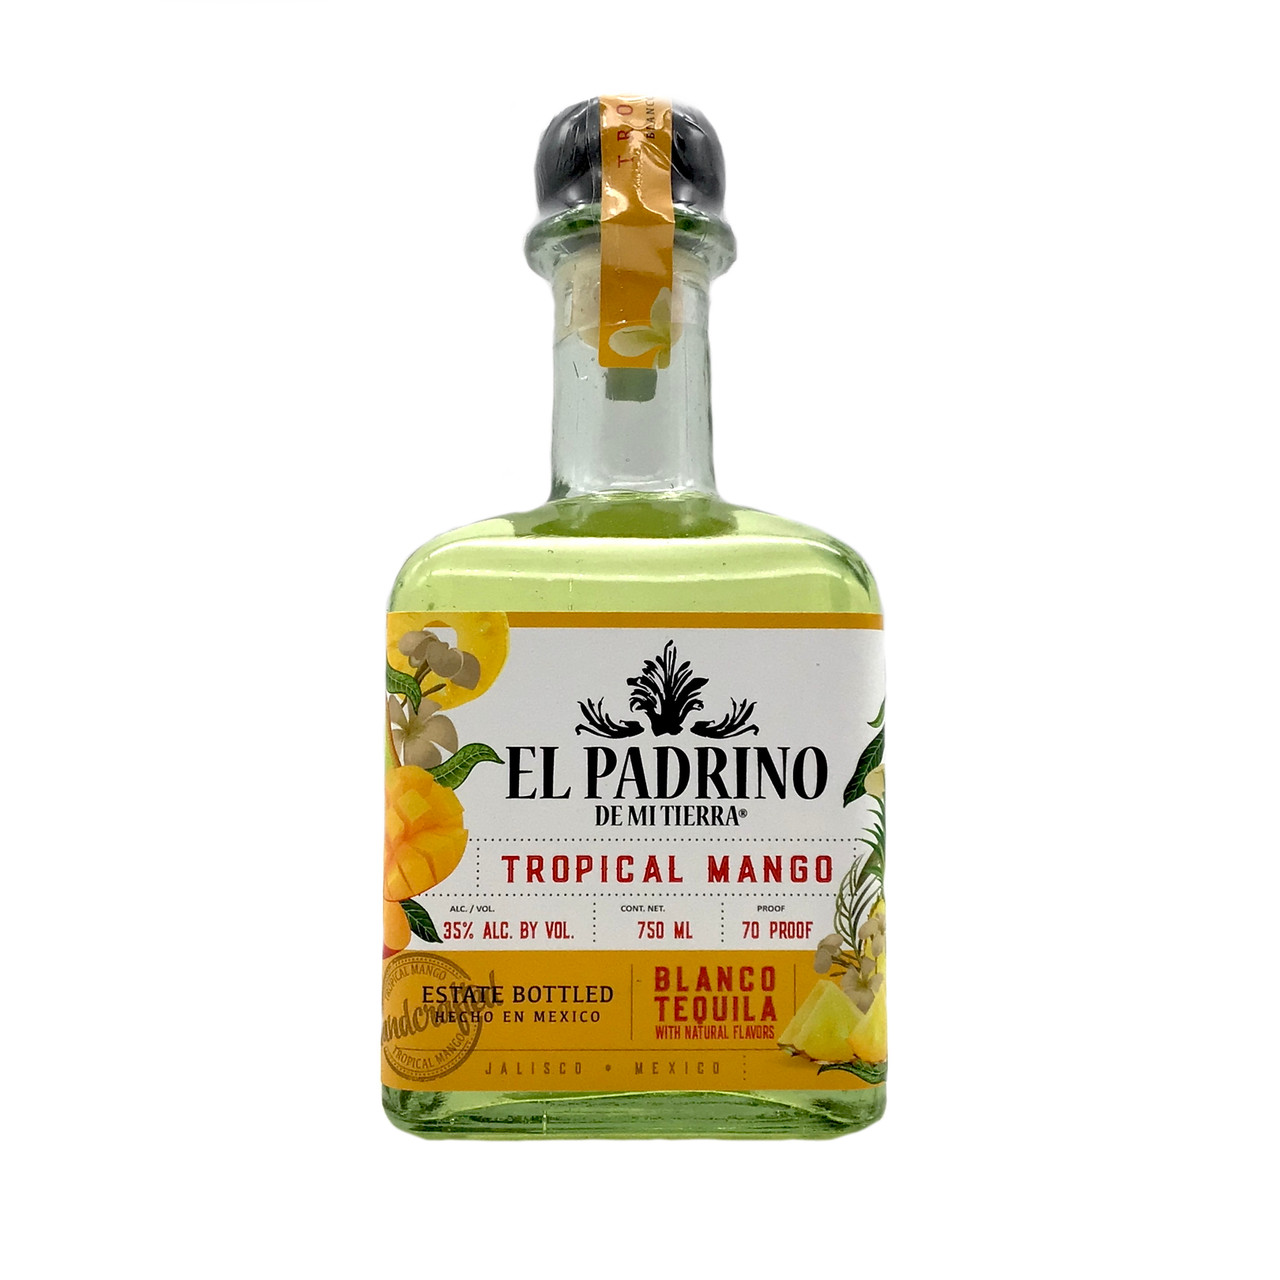 El Padrino Blanco Tequila